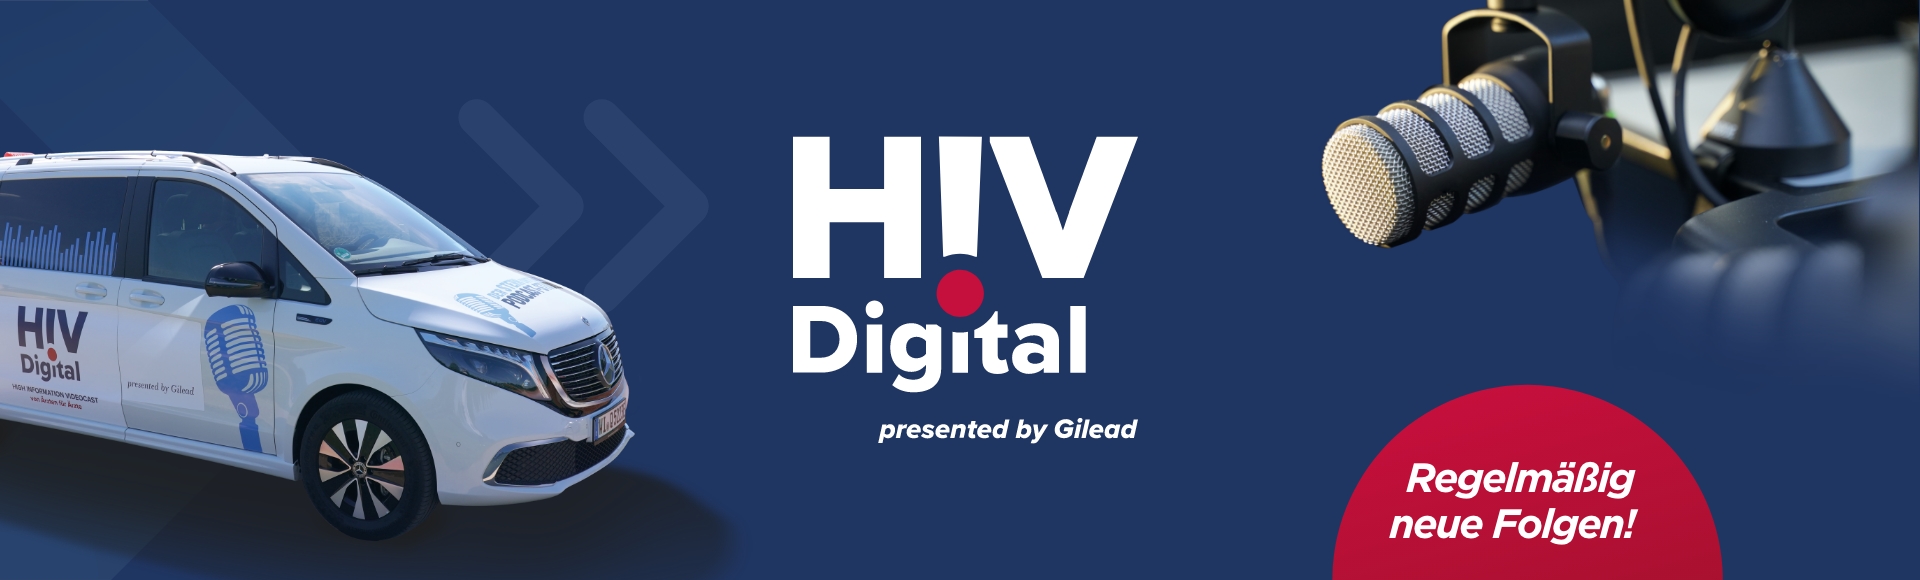 HIV digital Teaser